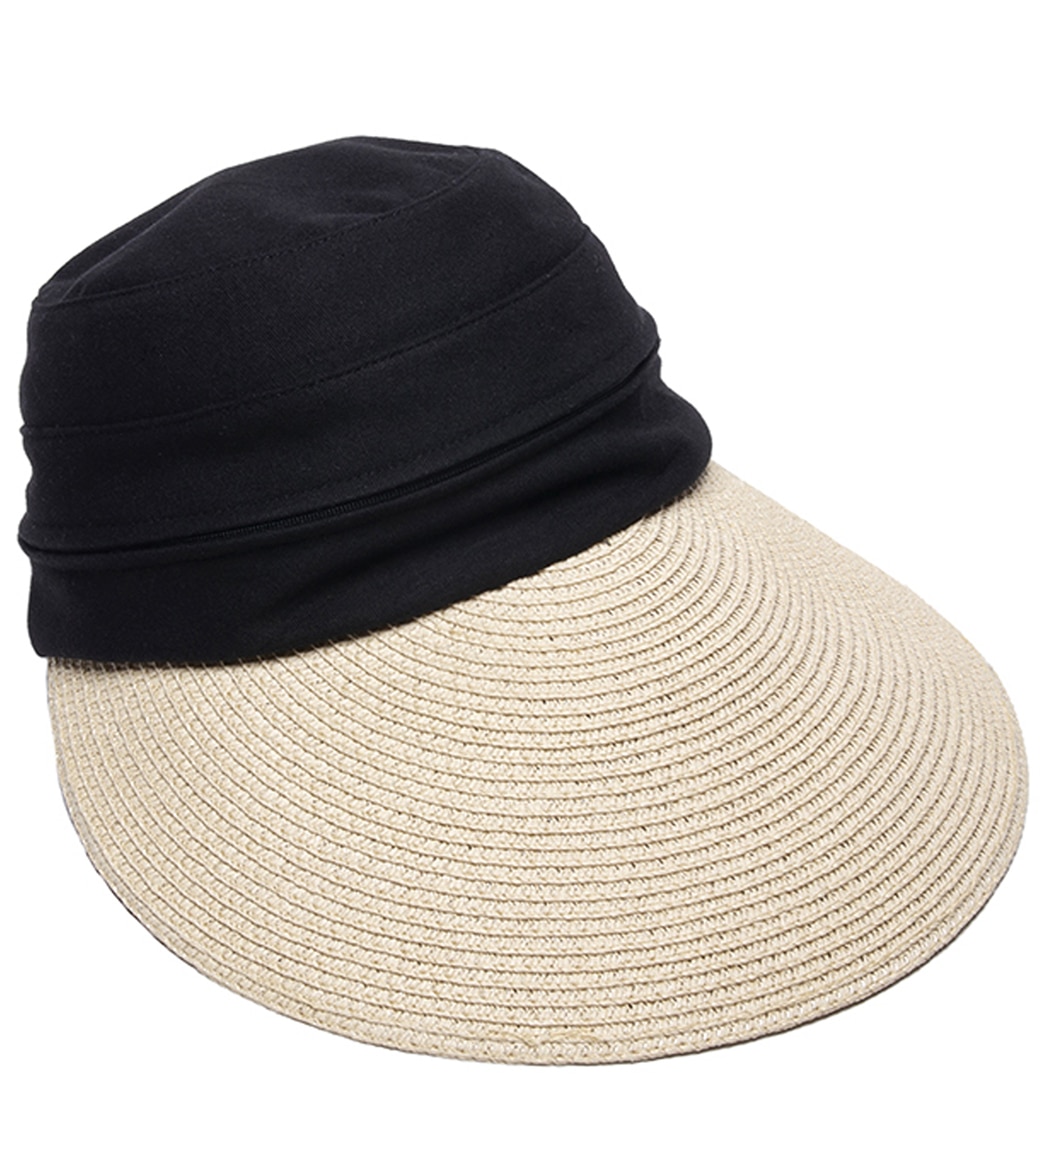 Physician Endorsed Women's Bimini Hat - Natural/Black Adjustable Cotton - Swimoutlet.com